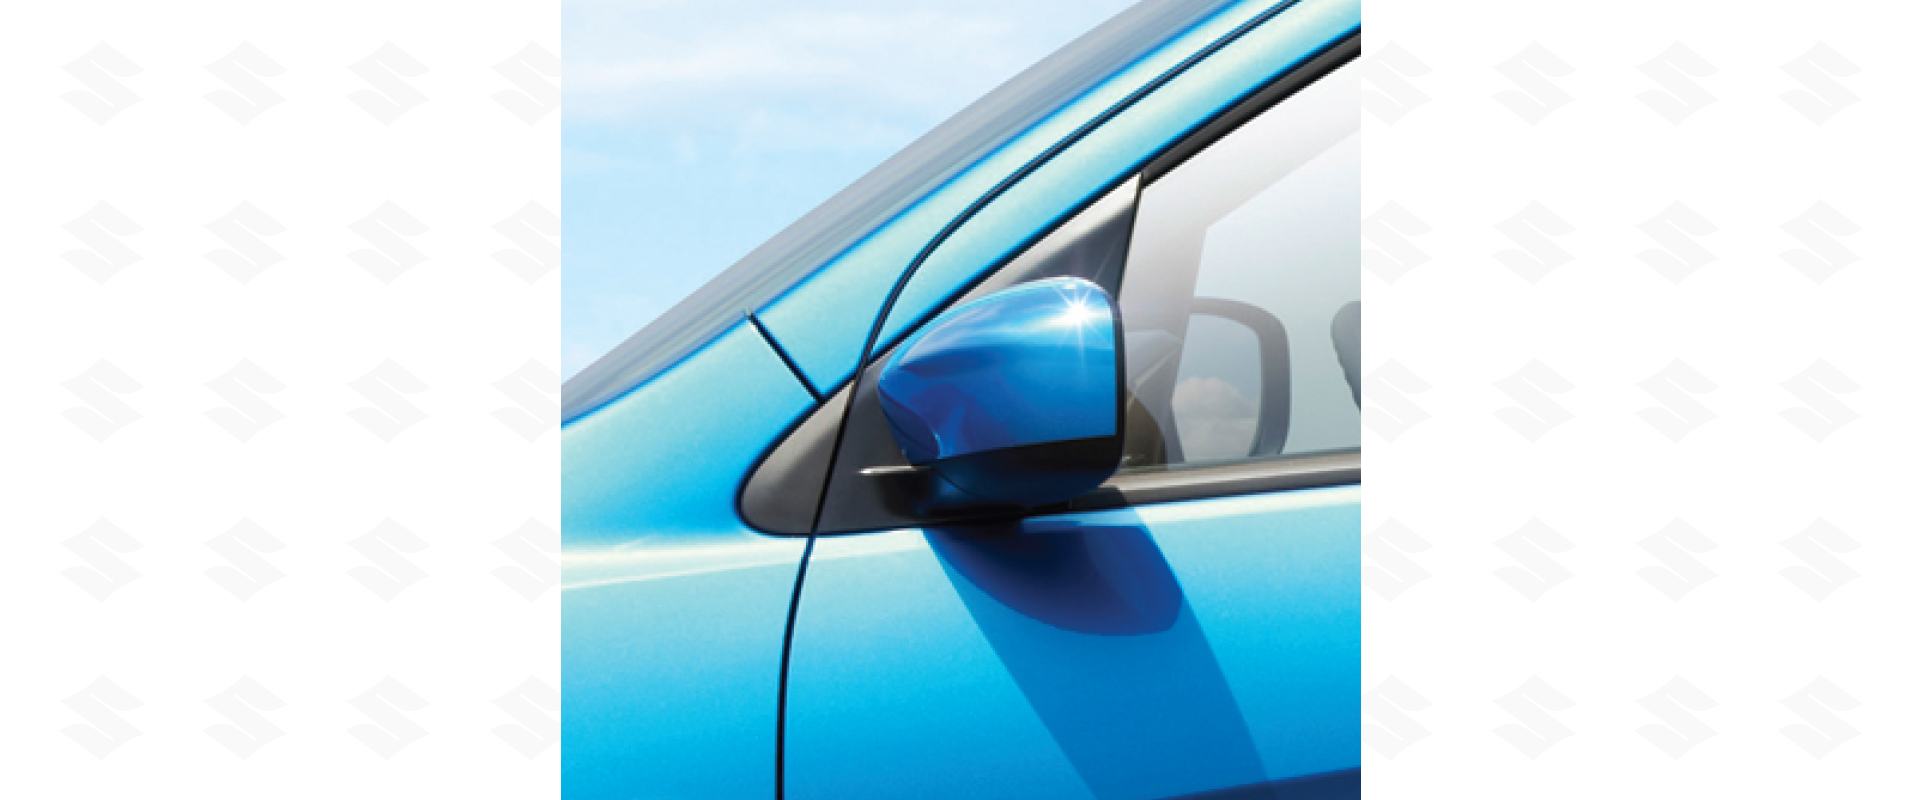 products/Automobiles/Cultus/USP/Suzuki_Cultus-power-side-mirror.jpg